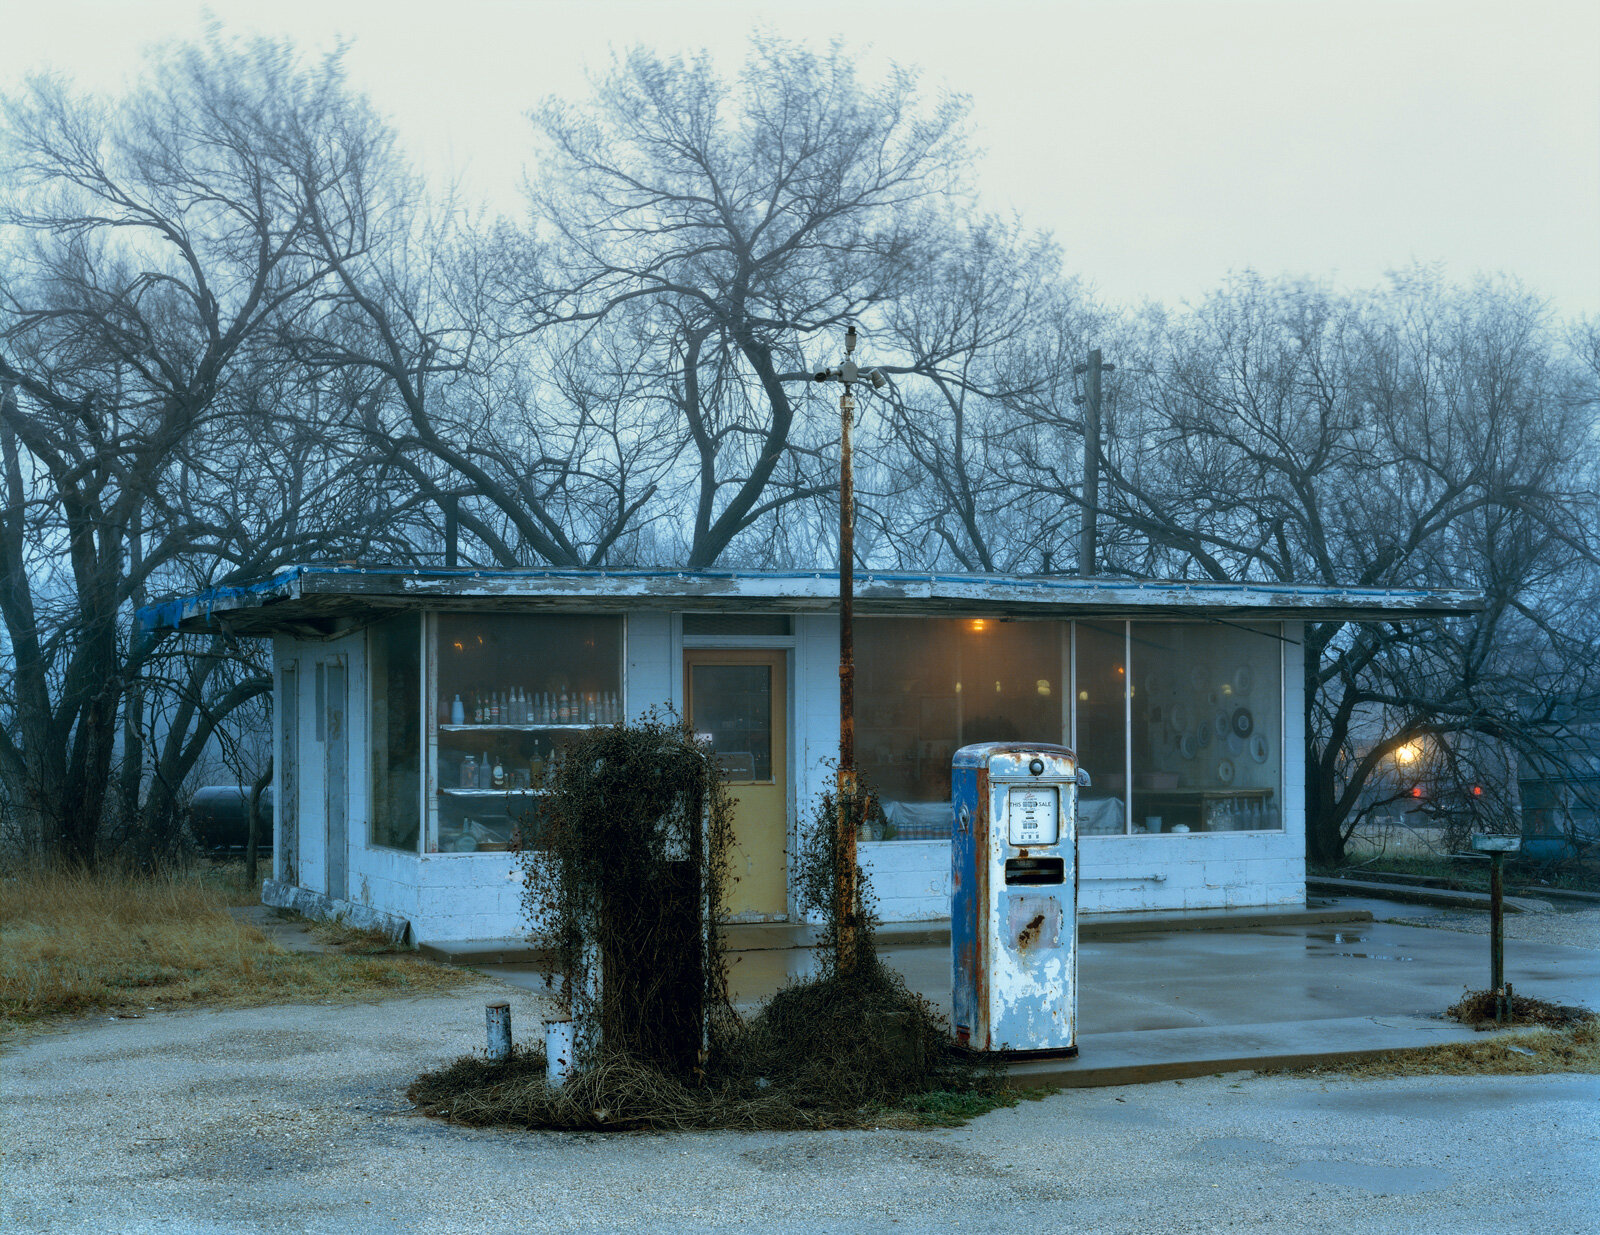  Snyder, Texas 2005 